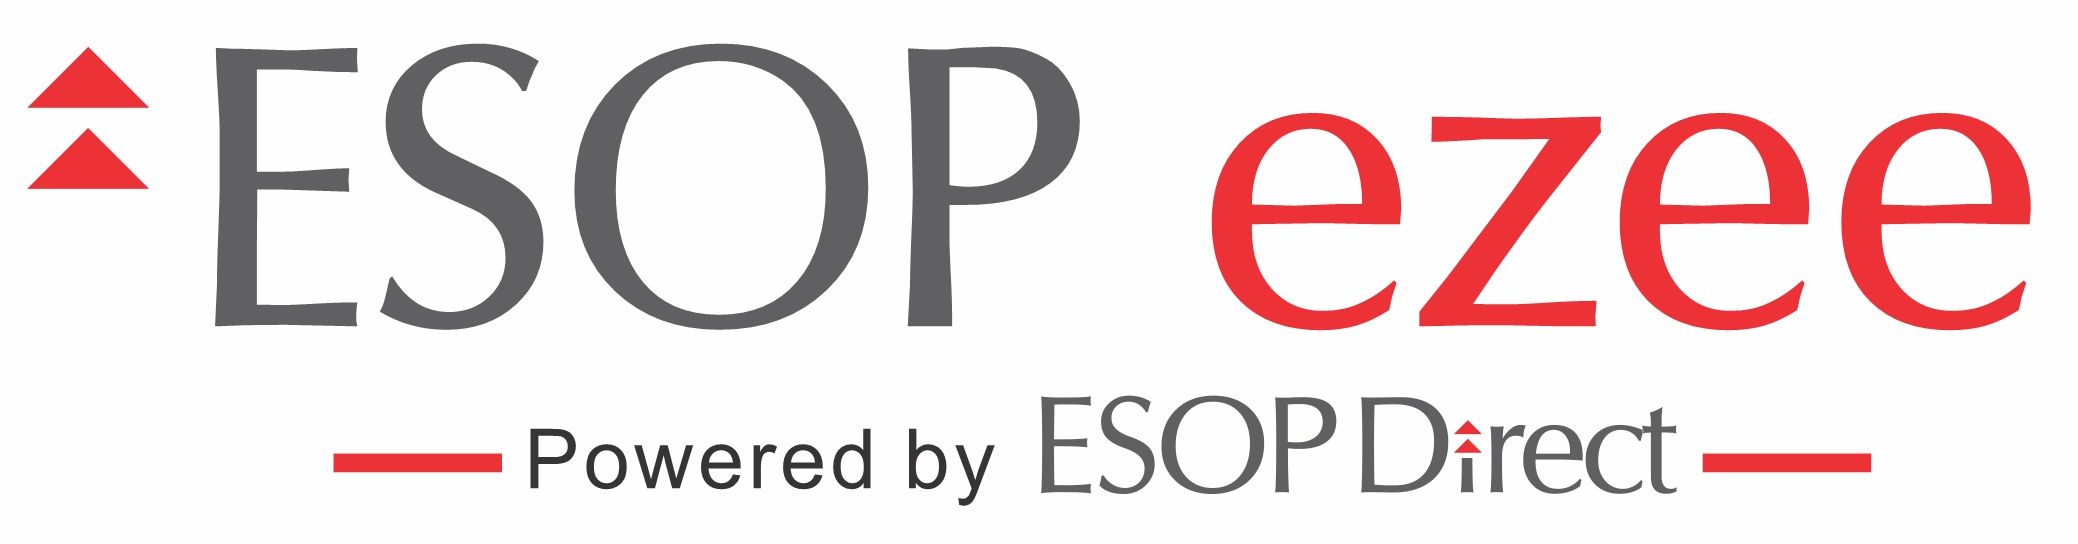 esopezee Logo